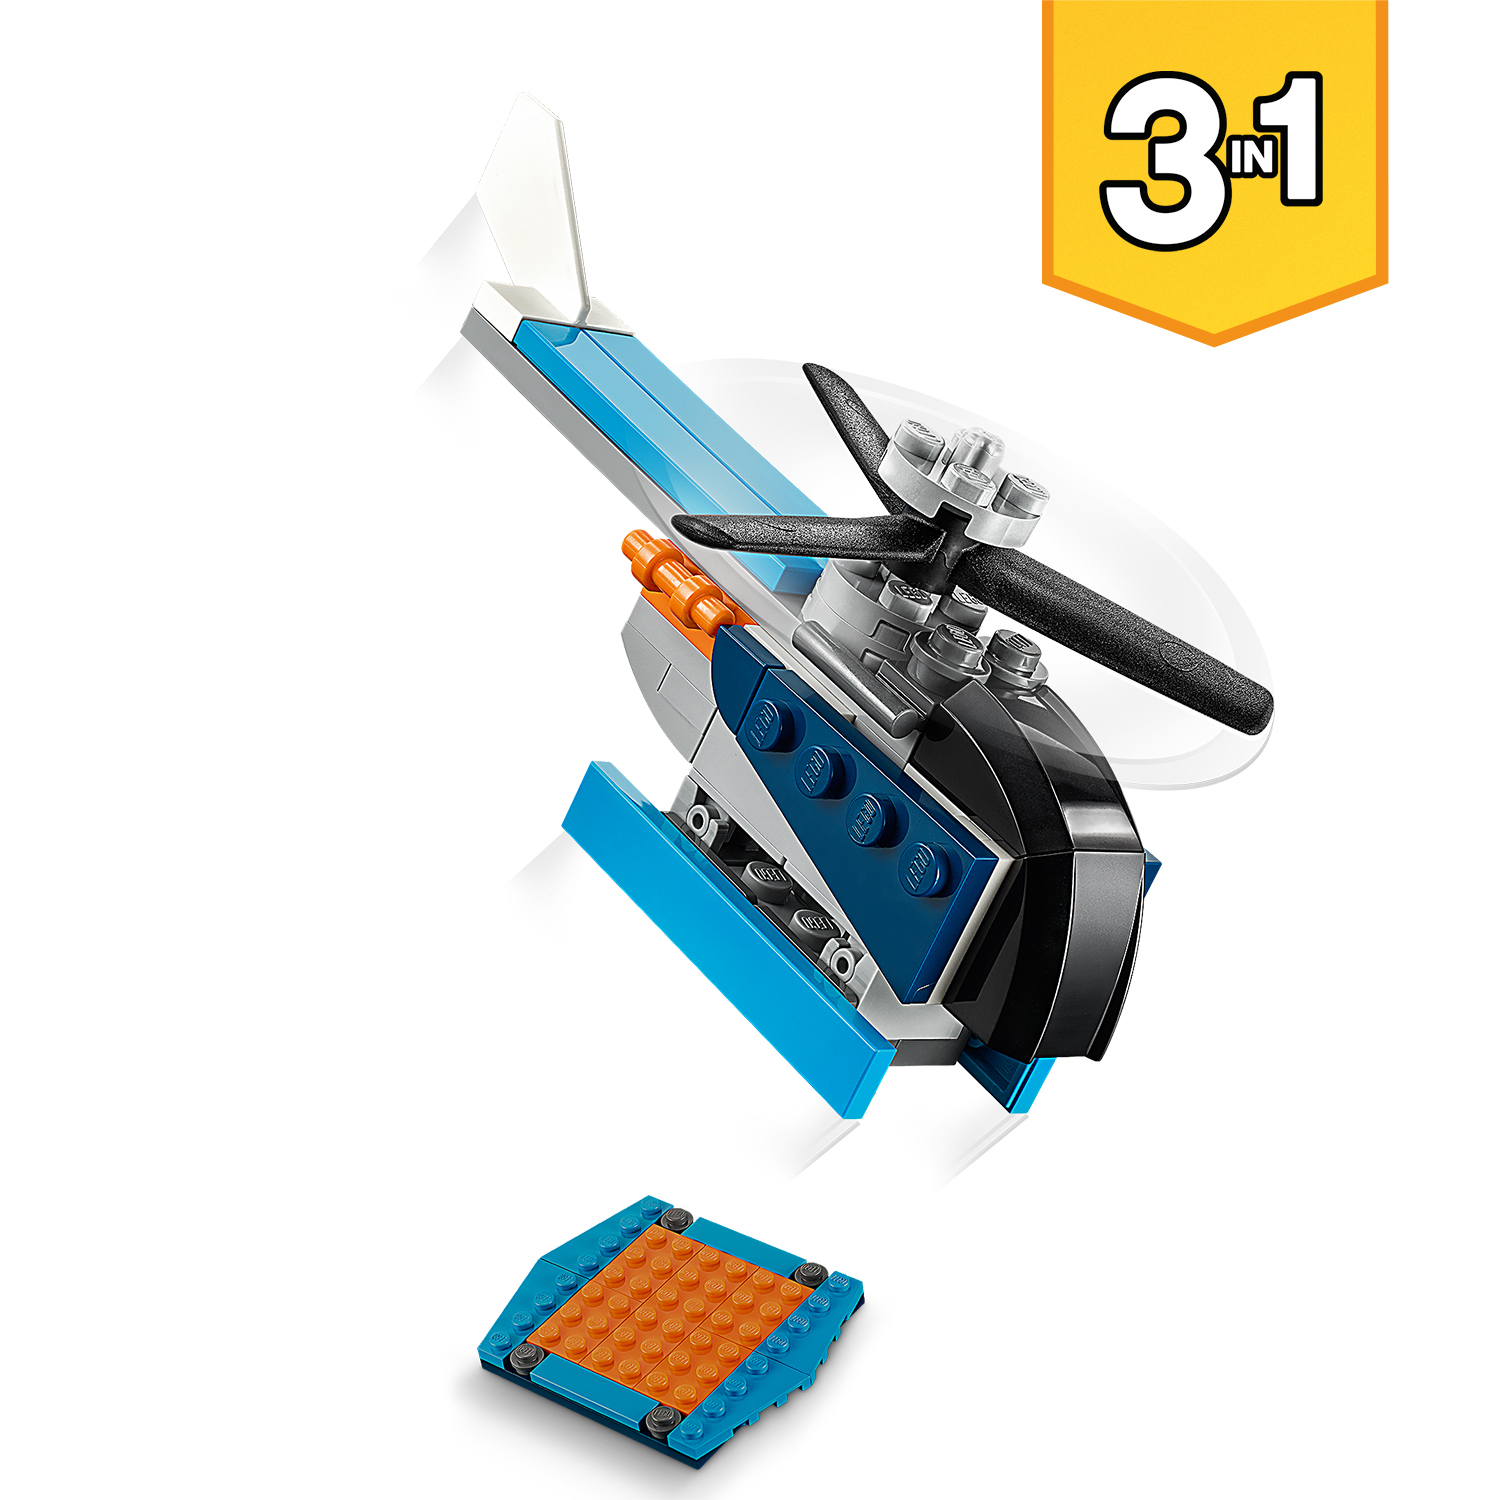 LEGO Creator Propellerflugzeug